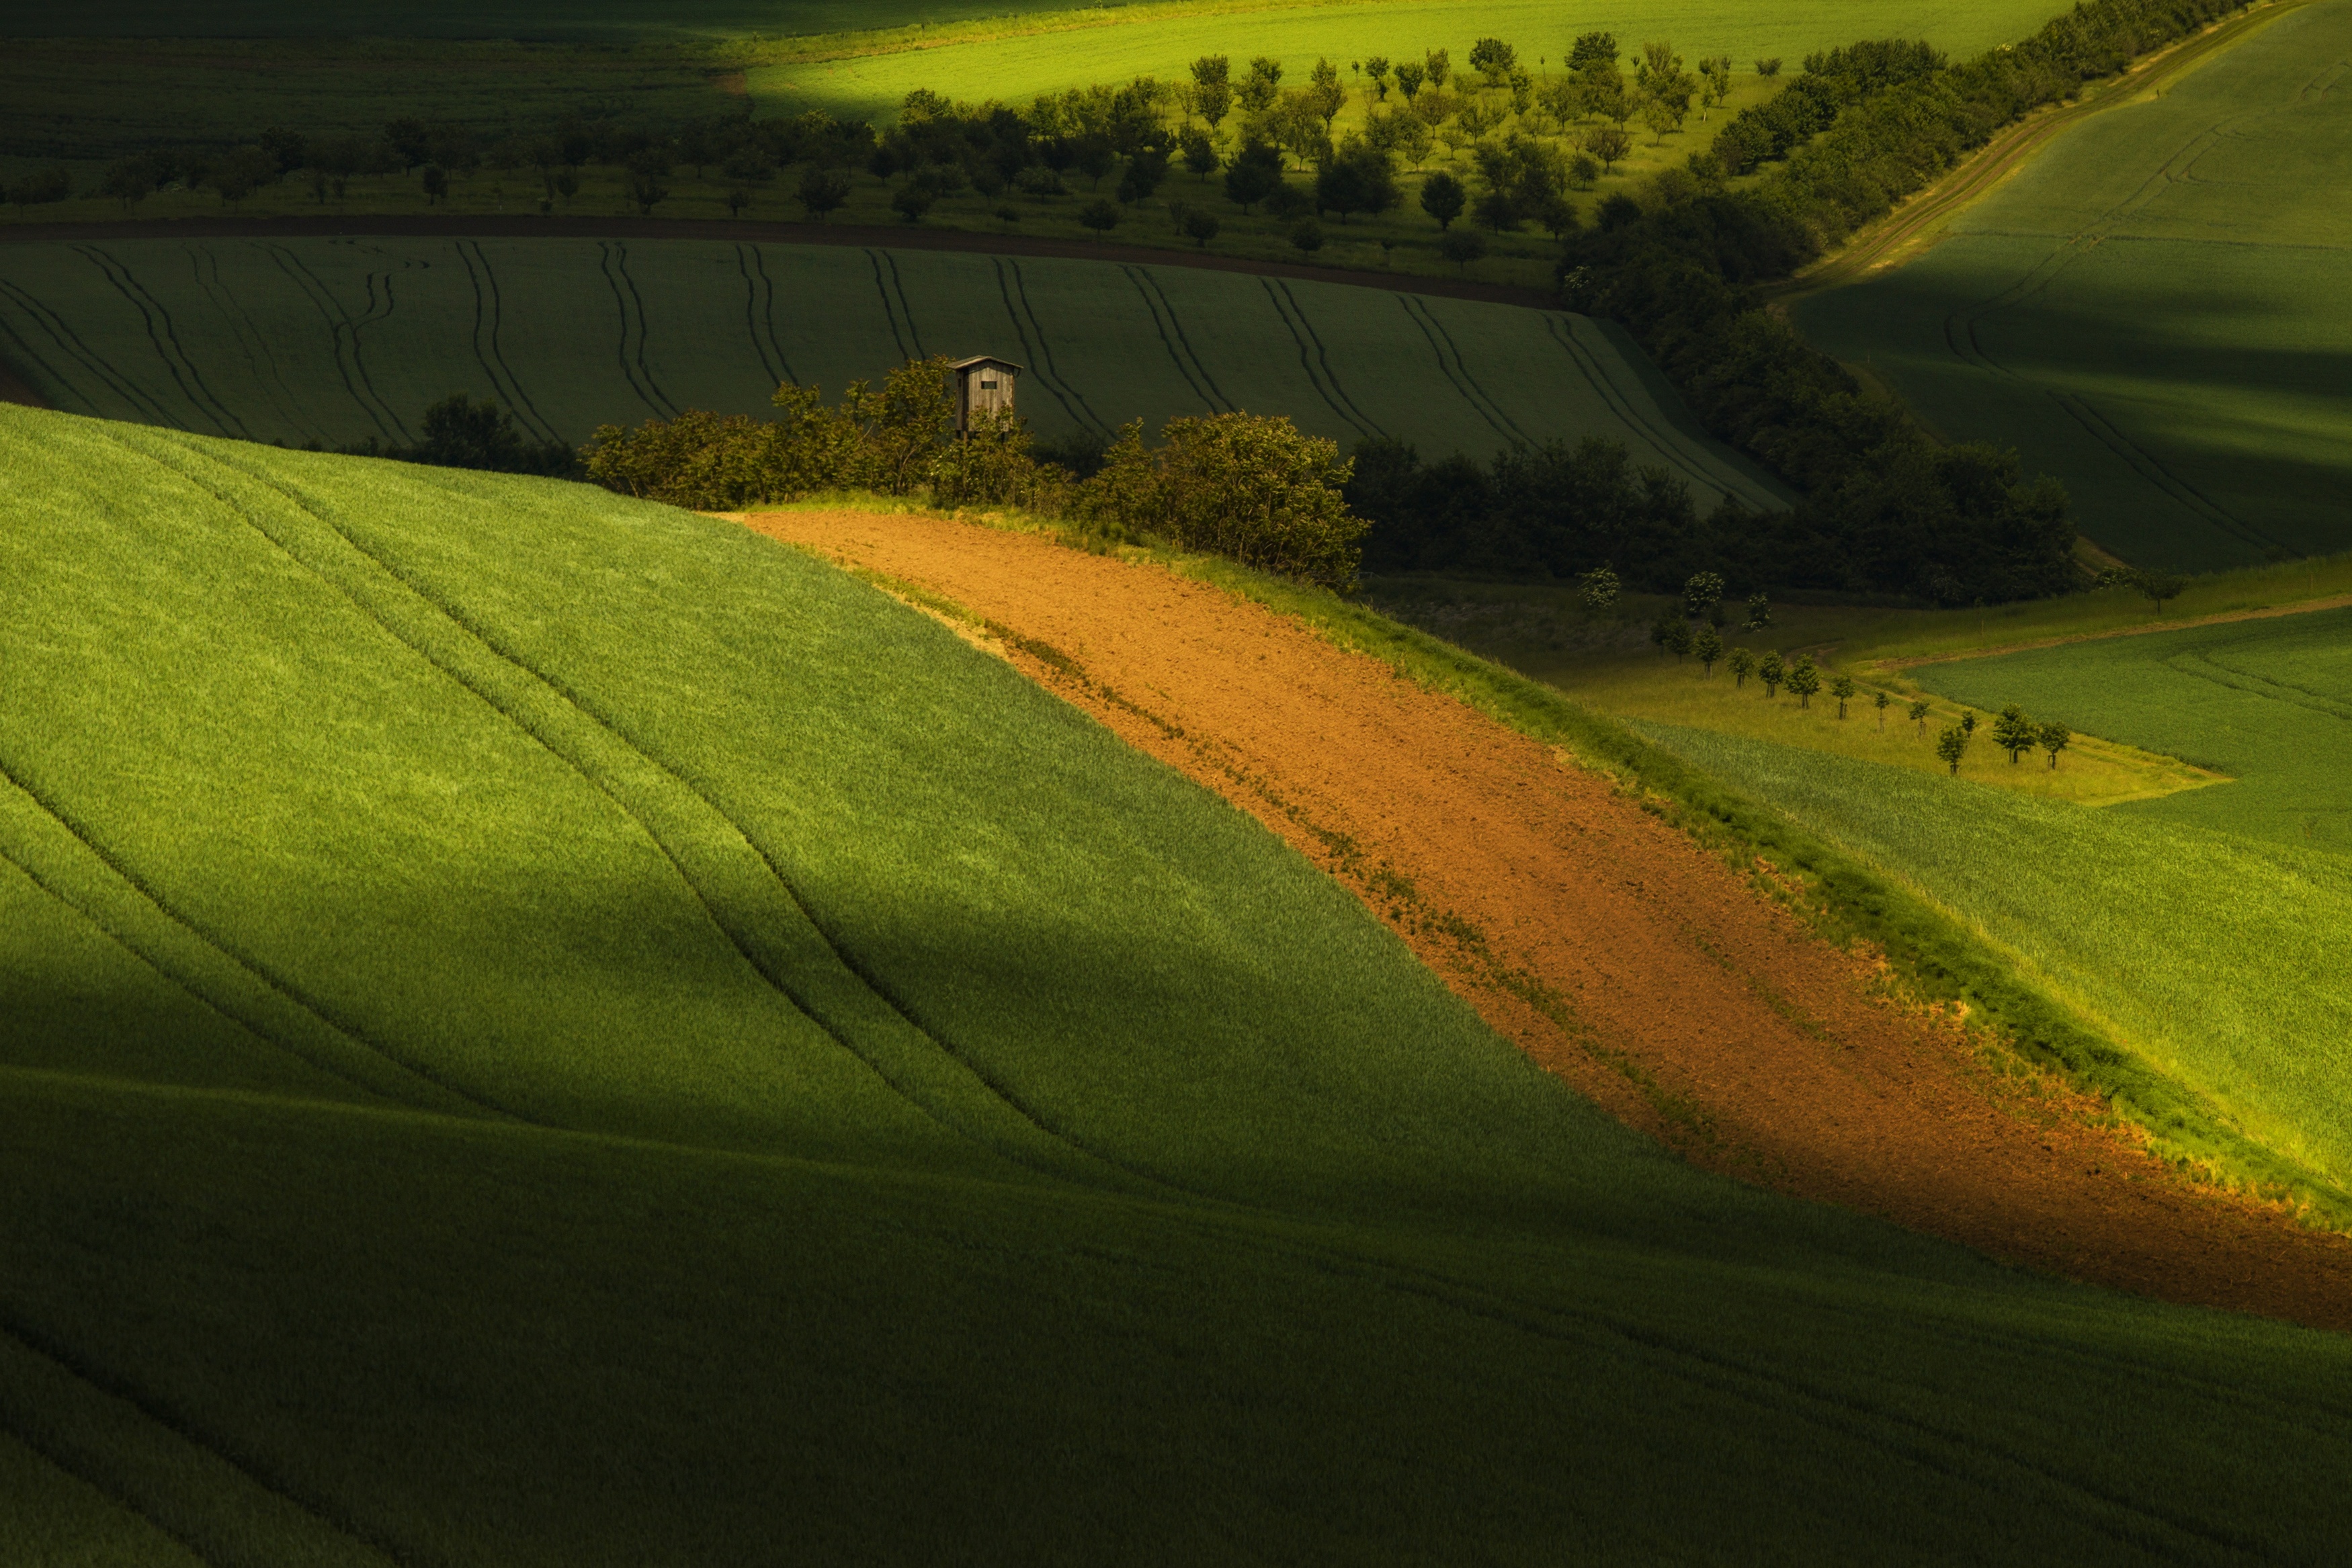 Agricultura, Field, Agriculture, Green, Day, Nature, Landscape, Moravia, Moravske-Toskansko, Rural, Damian Cyfka